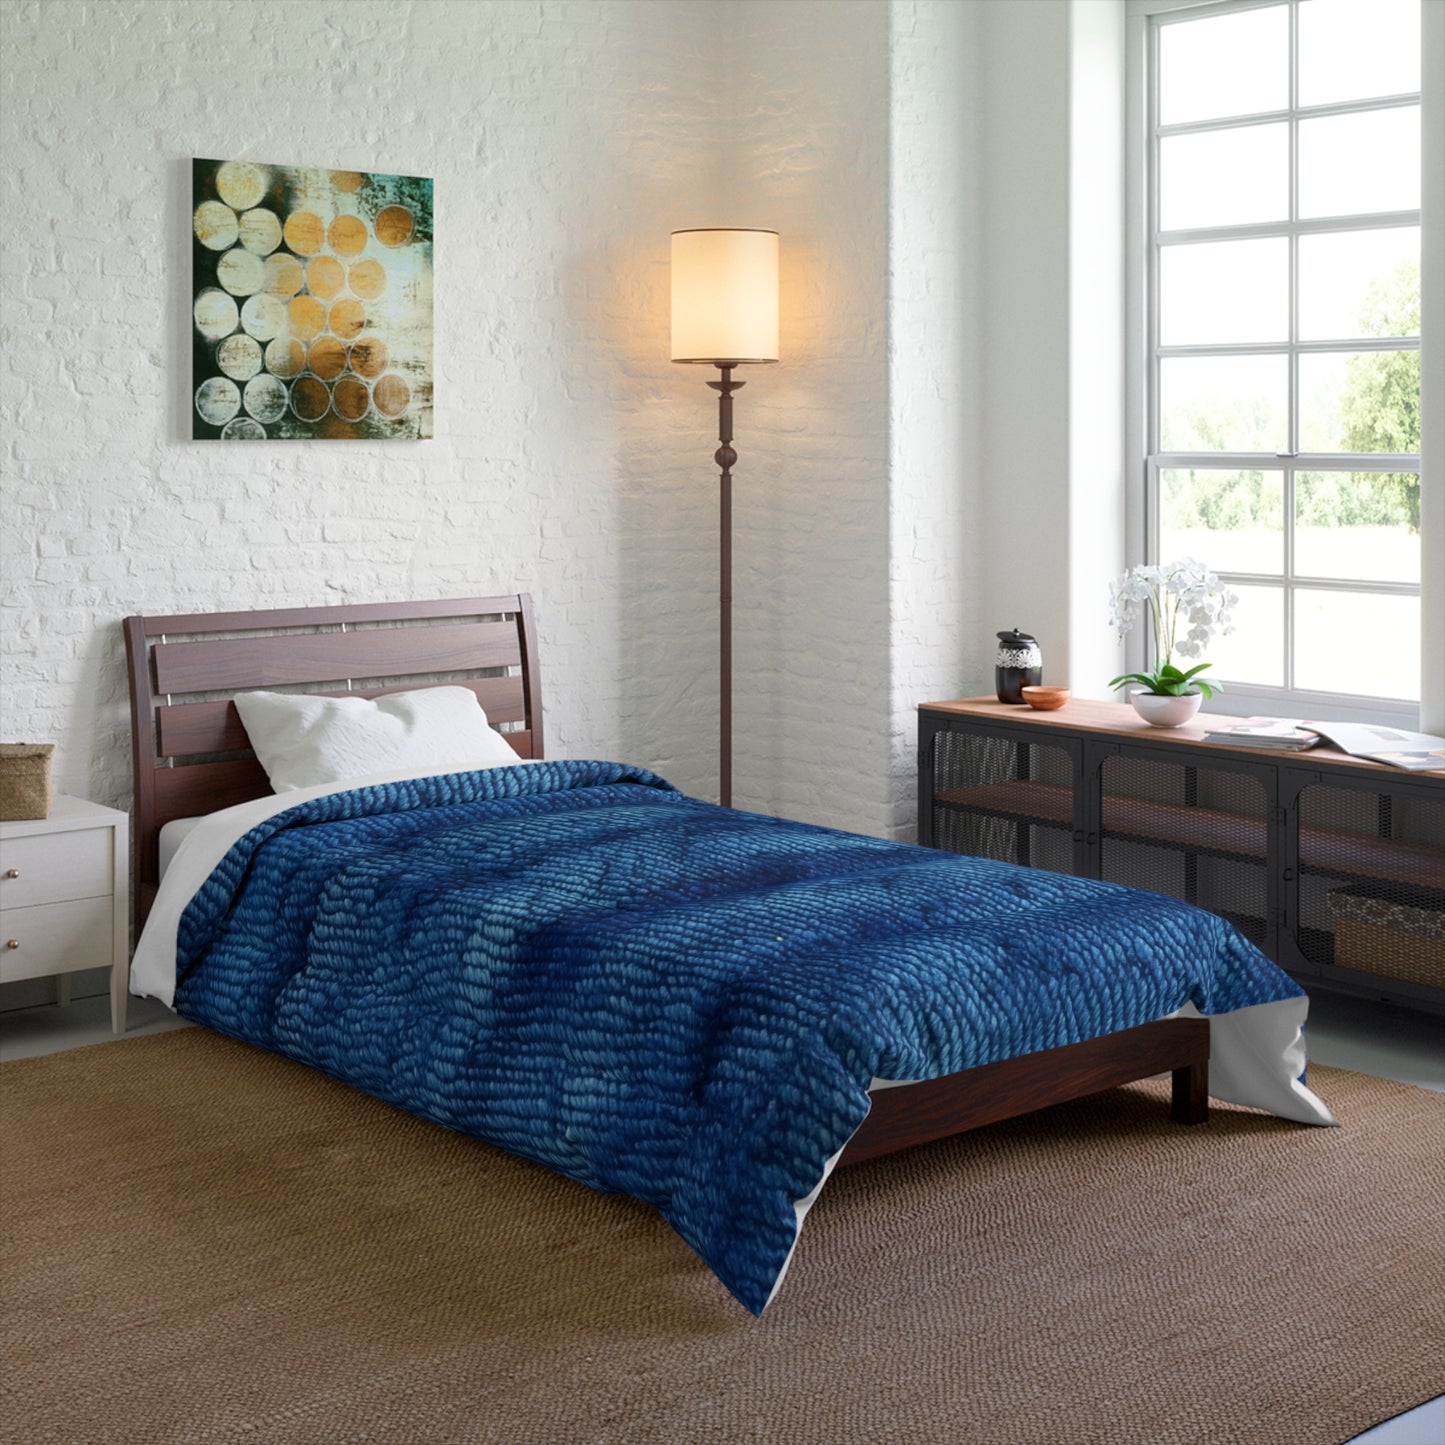 Blue Spectrum: Denim-Inspired Fabric Light to Dark - Comforter